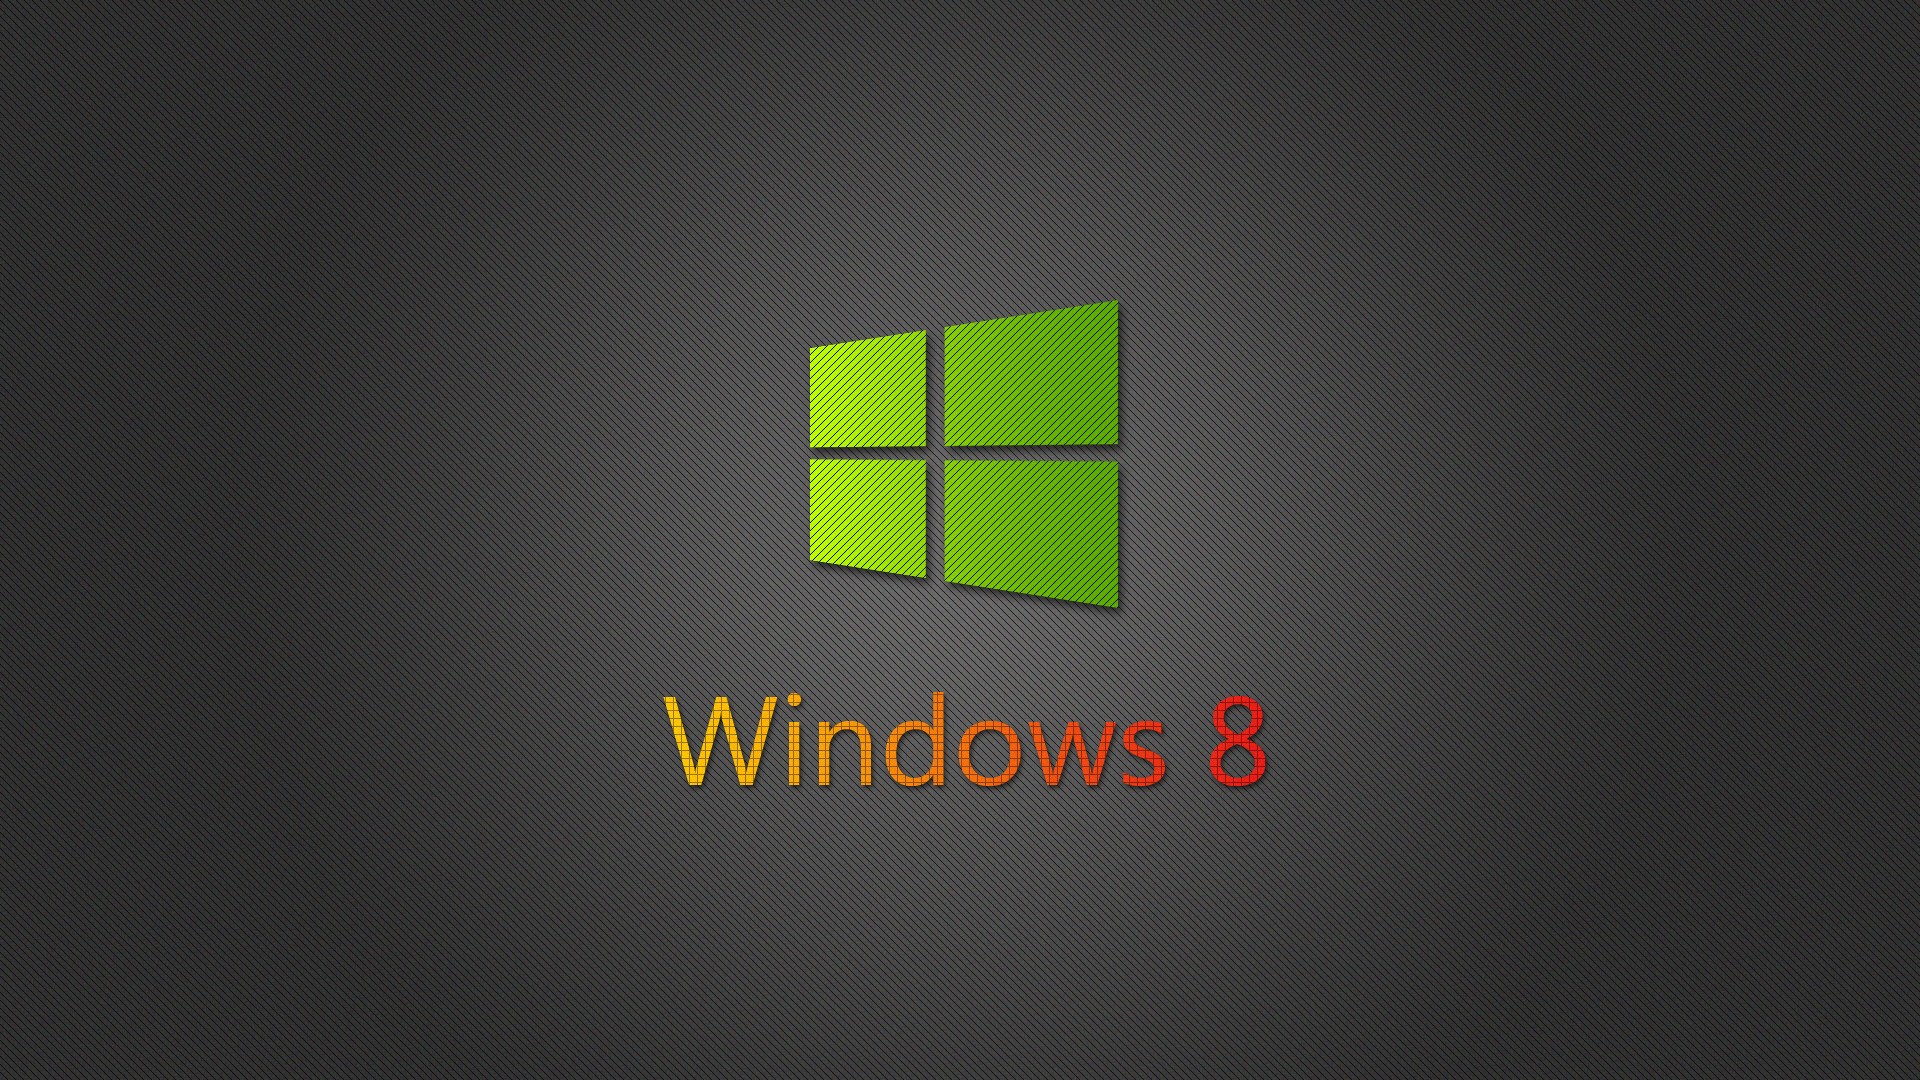 Windows 8 Full HD Wallpaper and Hintergrund | 1920x1080 ...